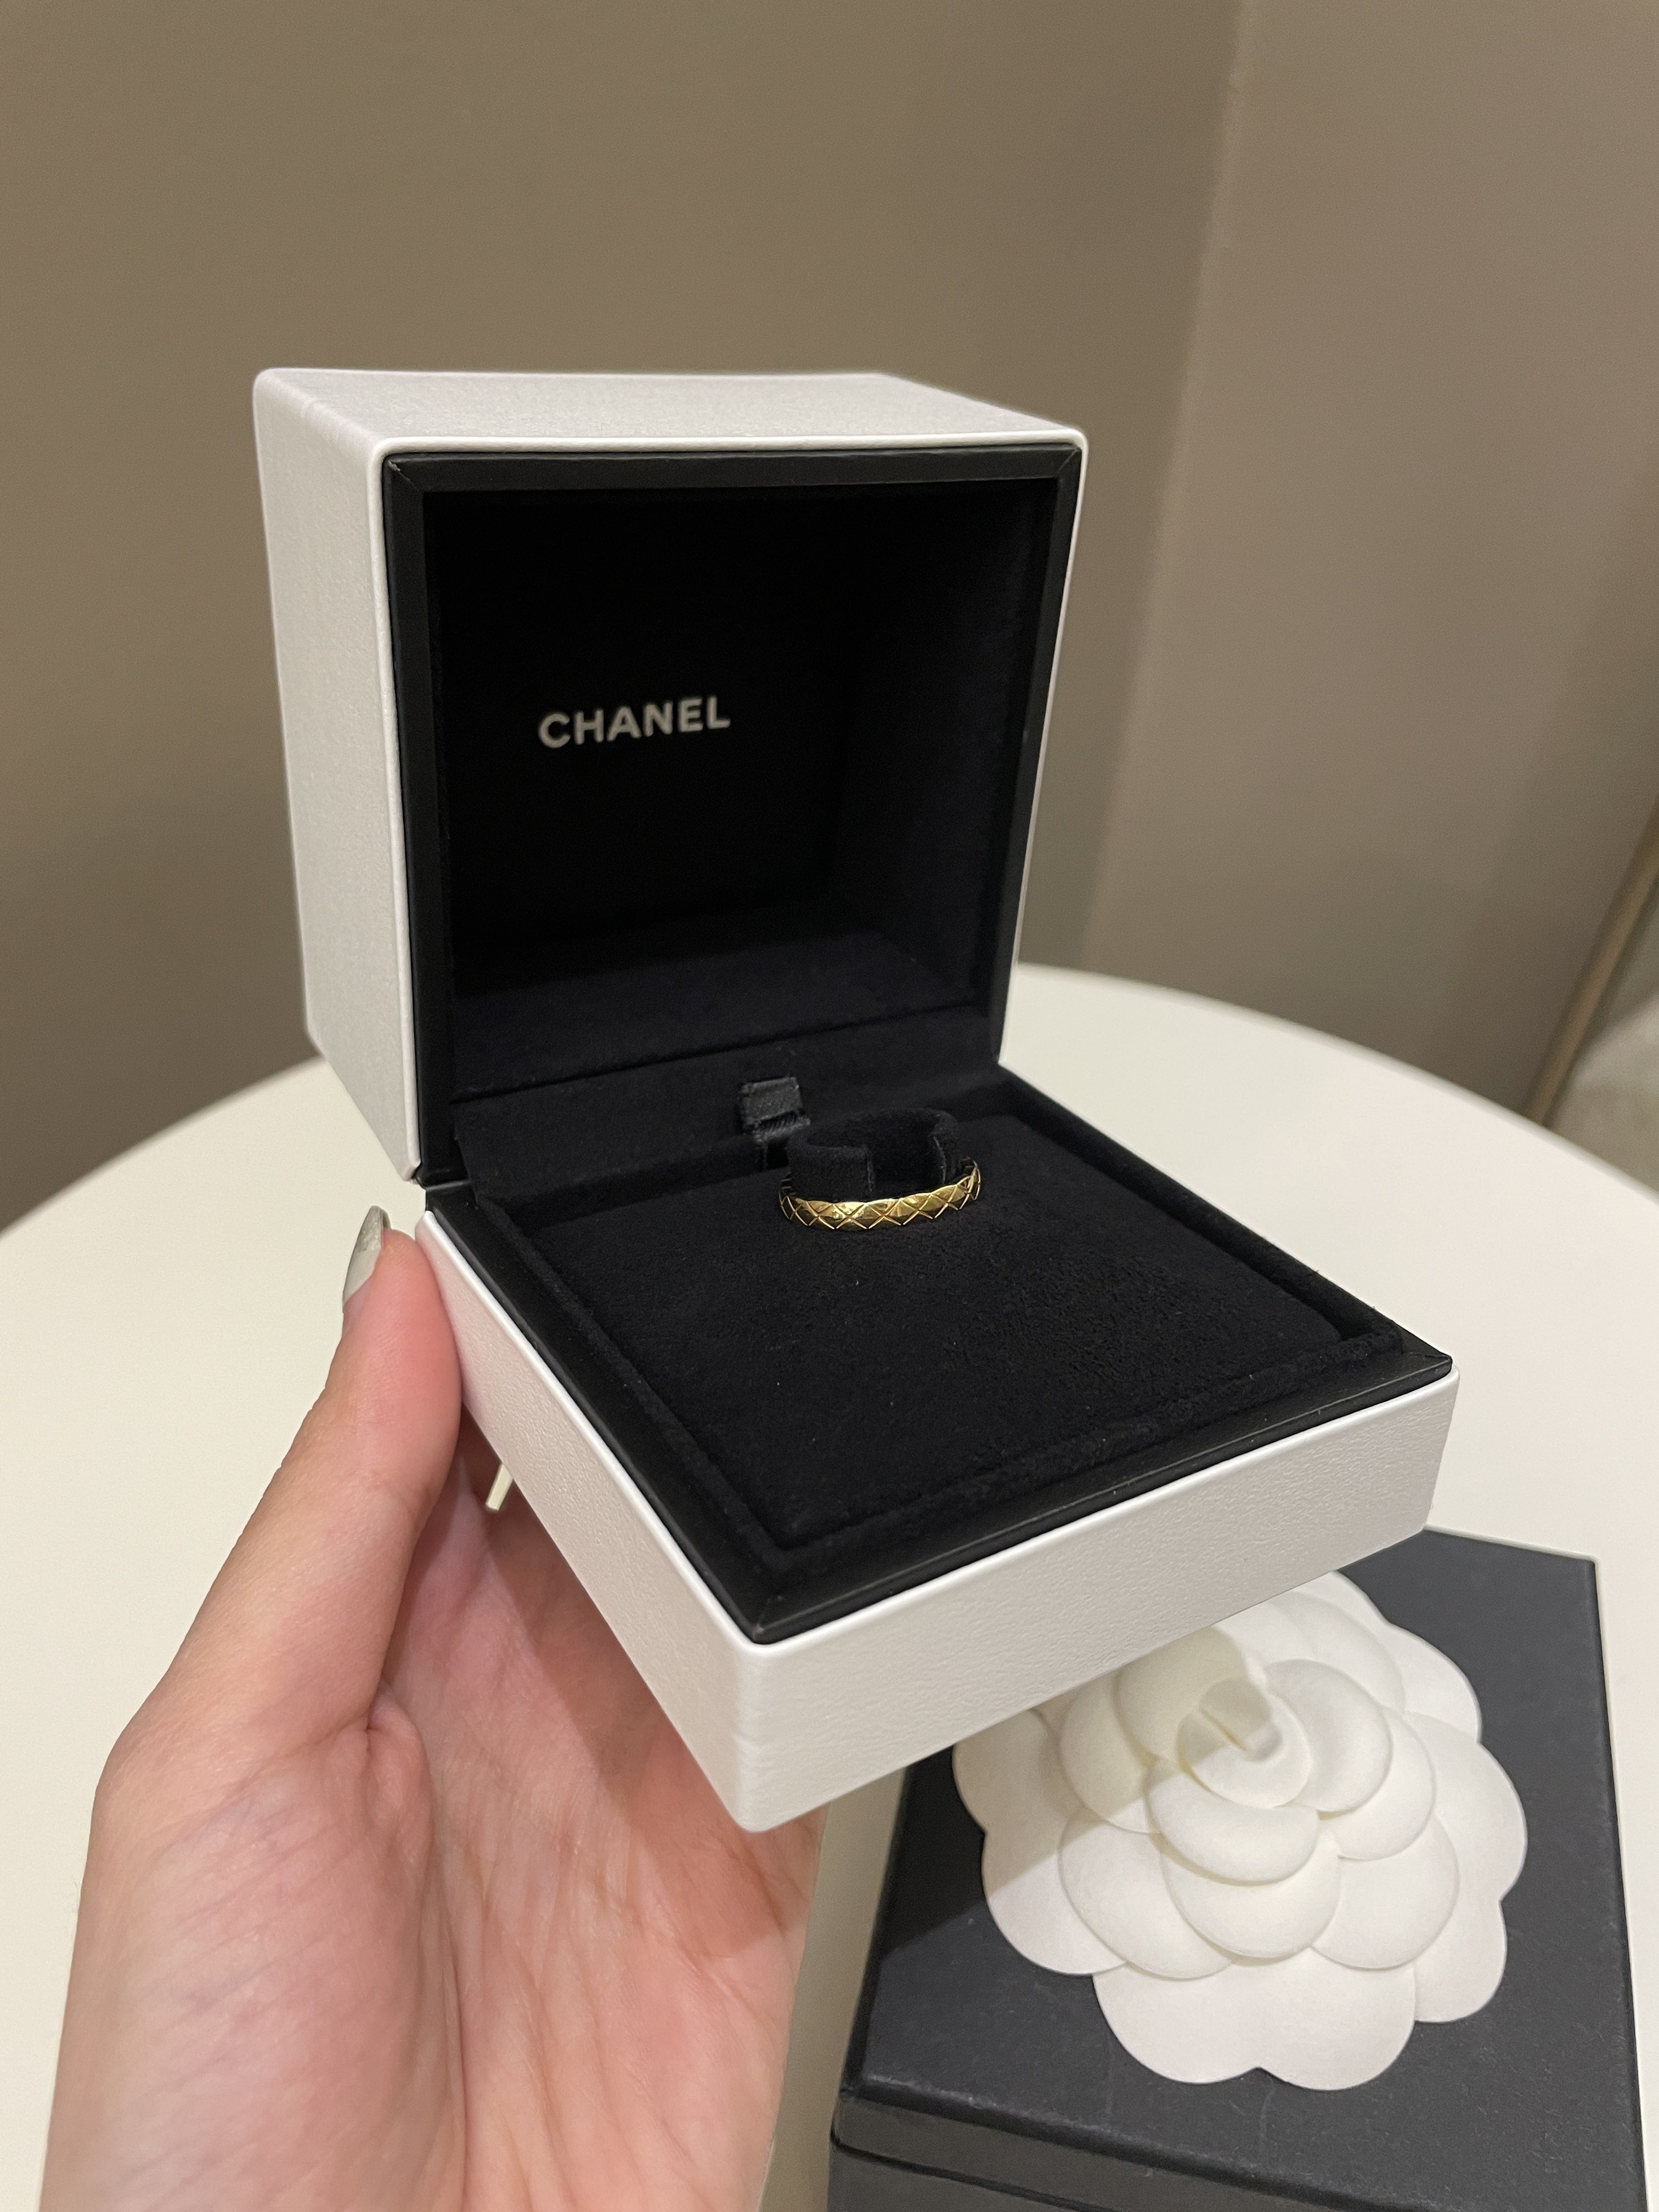 Chanel COCO Crush Ring
18K Yellow Gold